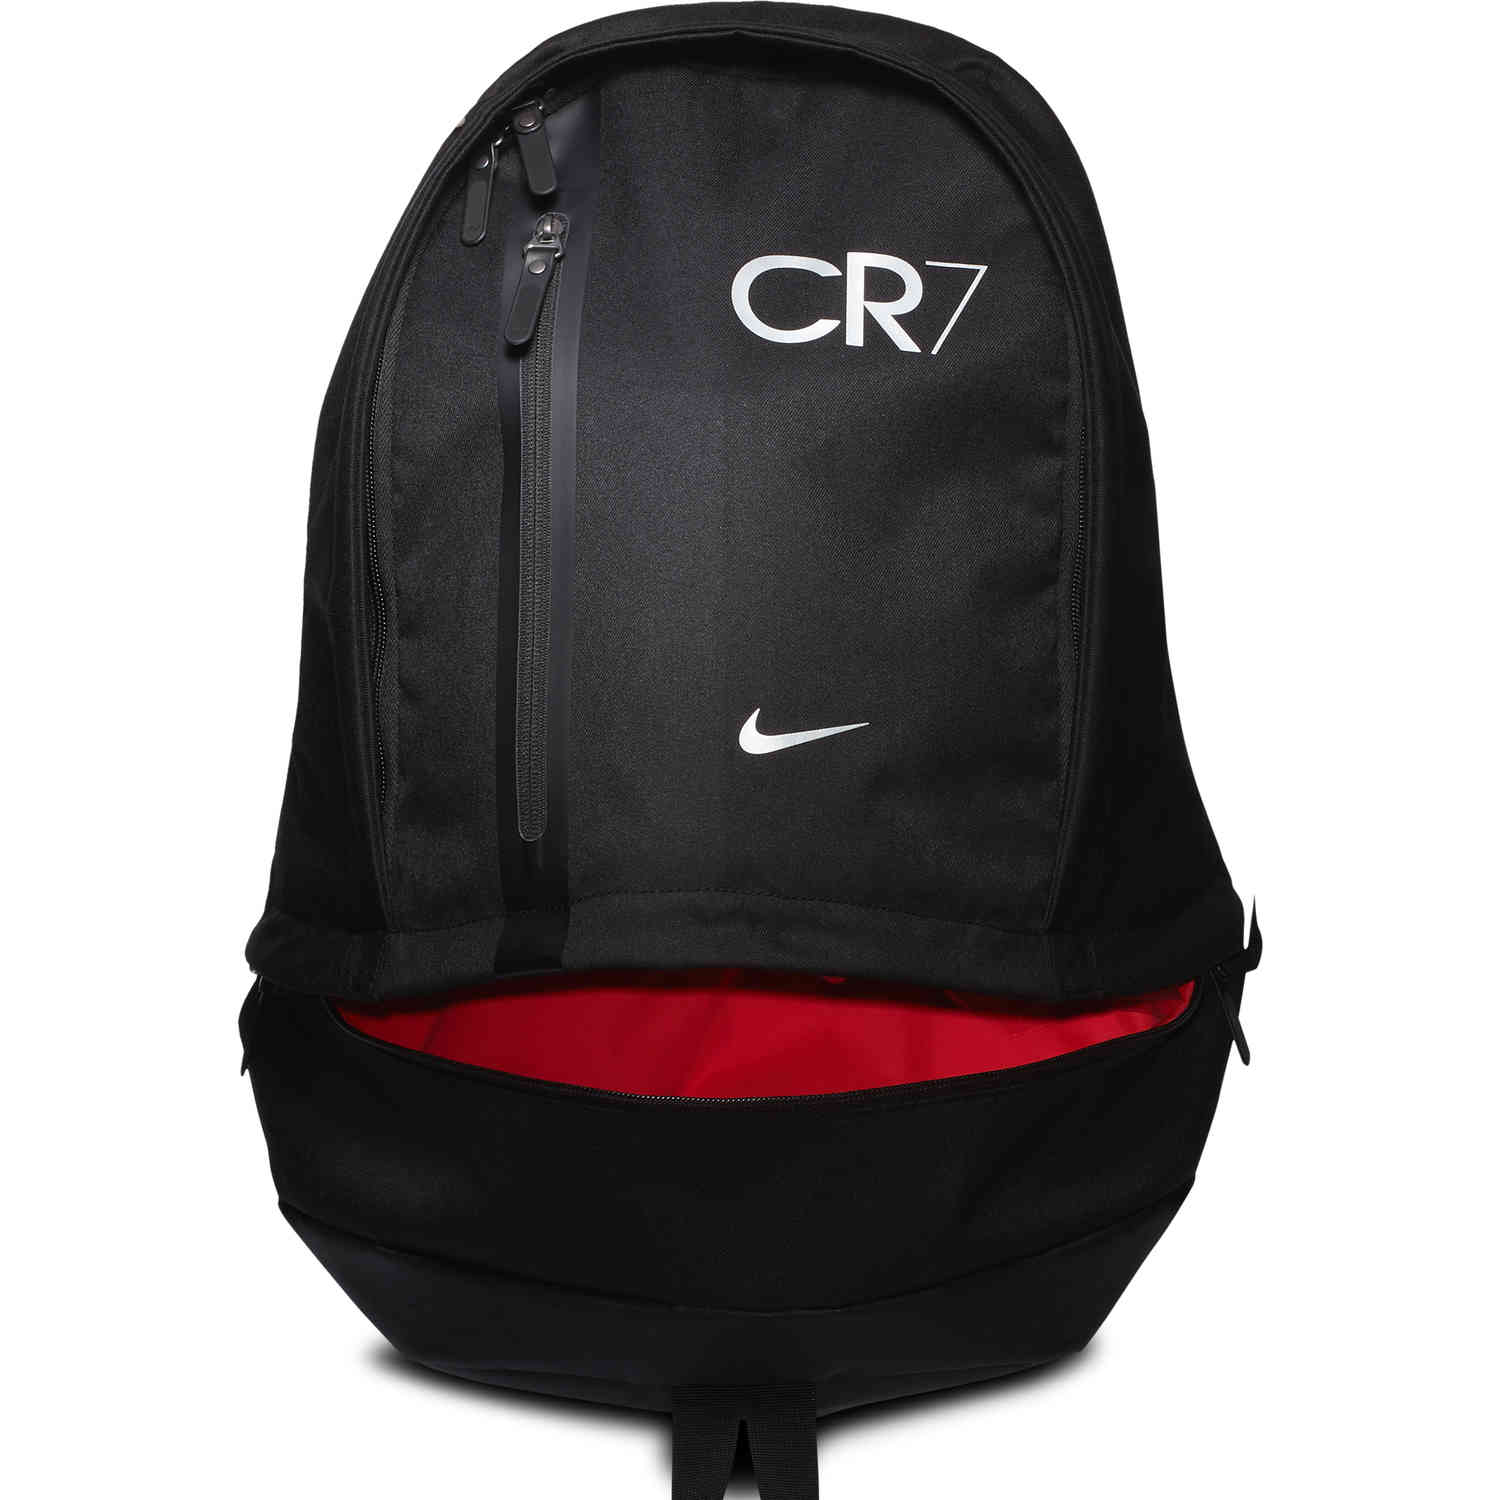 Nike CR7 Cheyenne Backpack Bahamas Desertcart